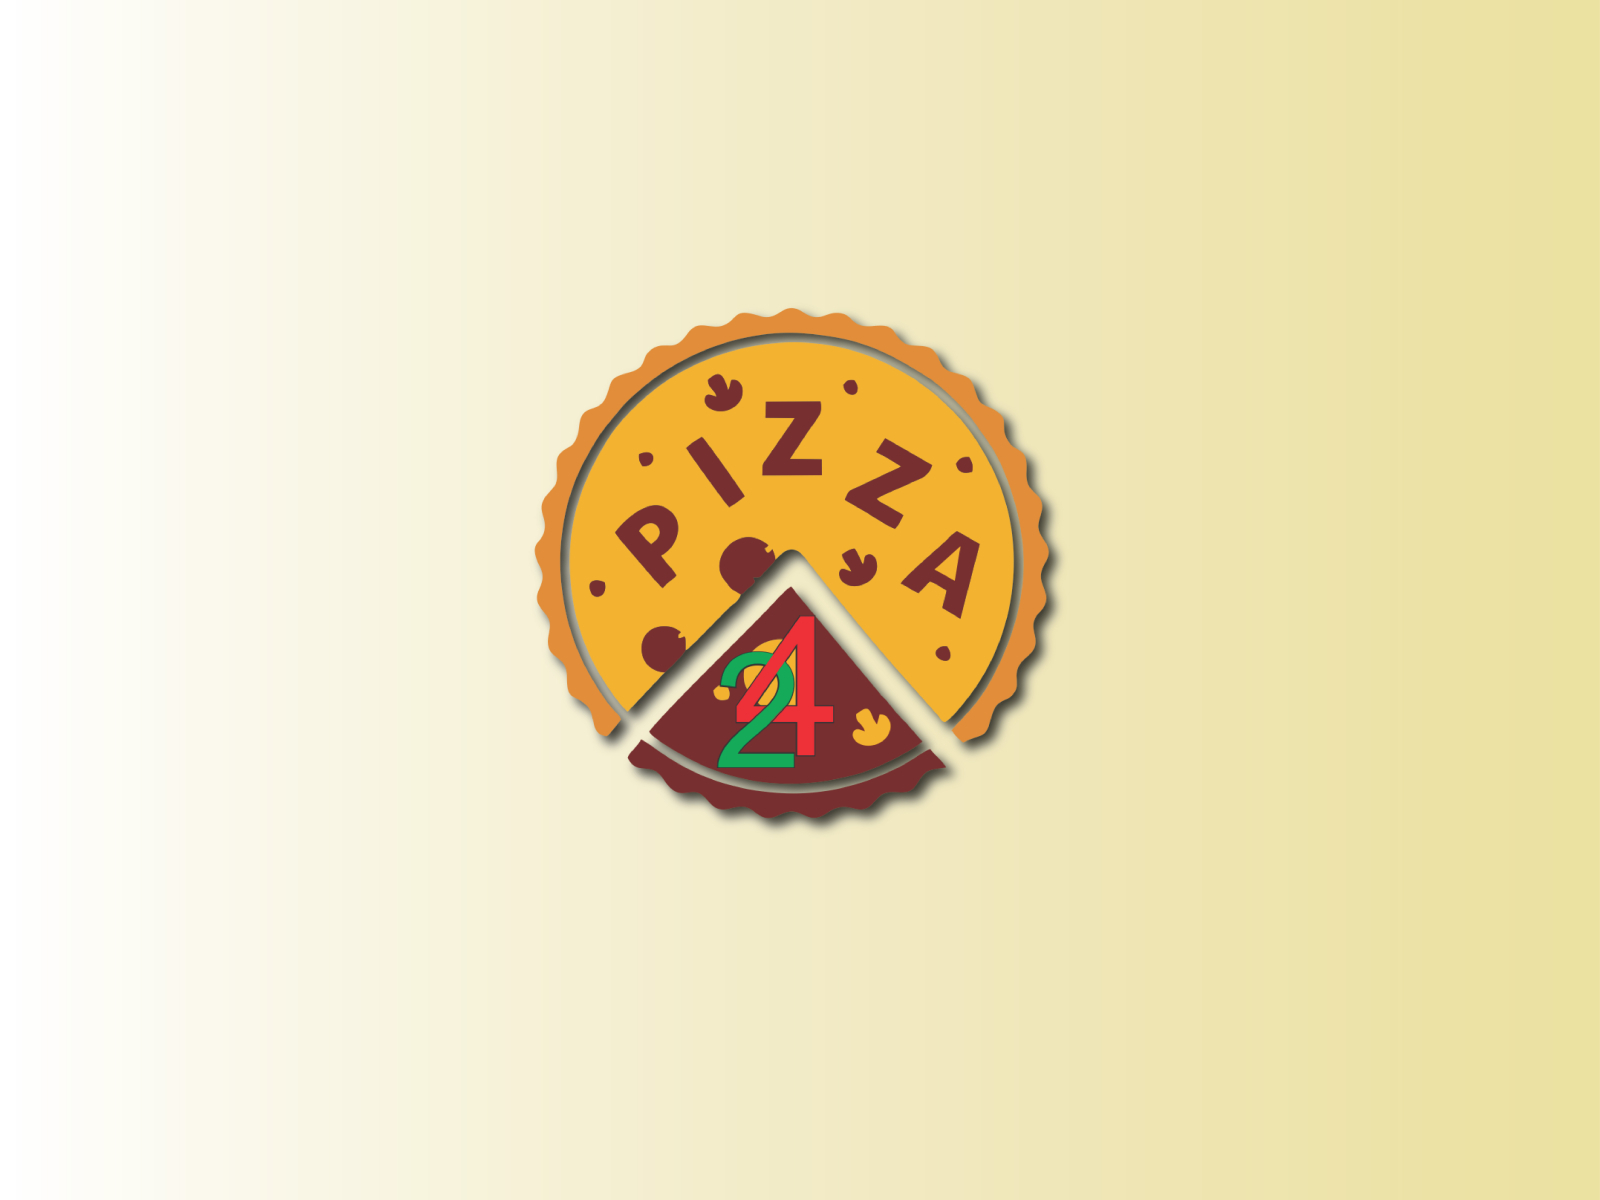 Pizza 24 by Muhammad Umer Abbas on Dribbble